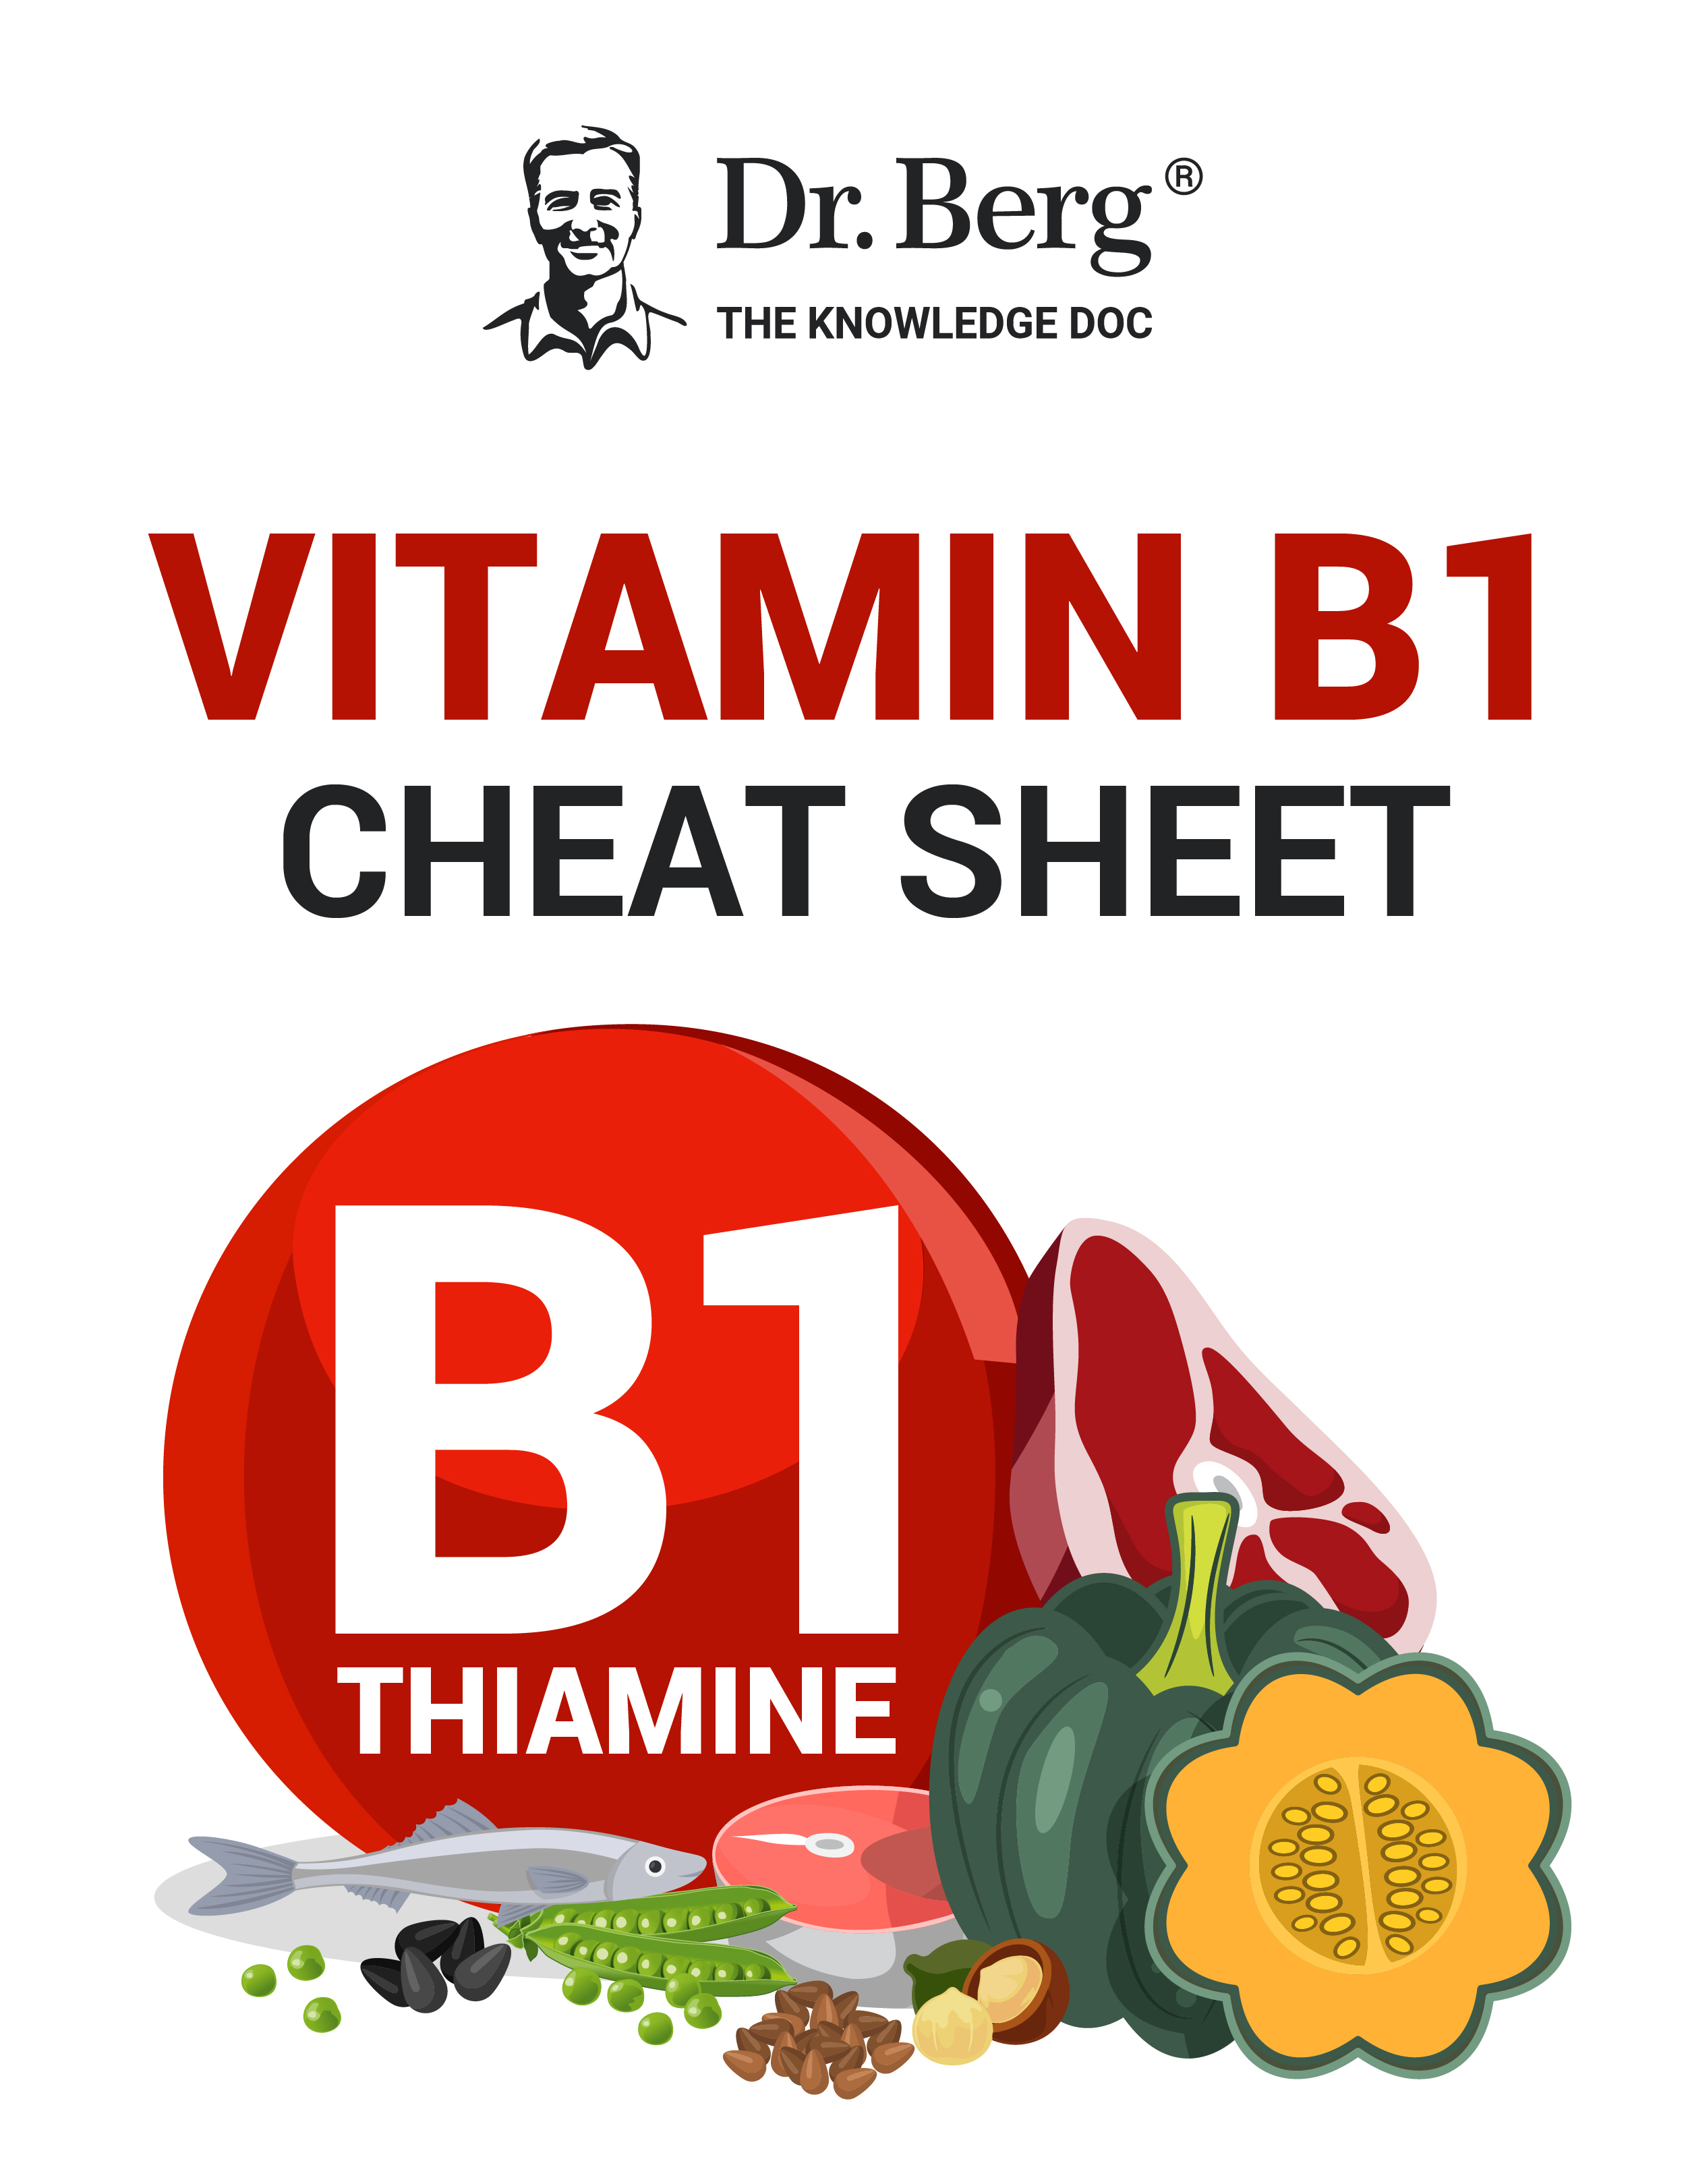 Vitamin B1 Cheat Sheet